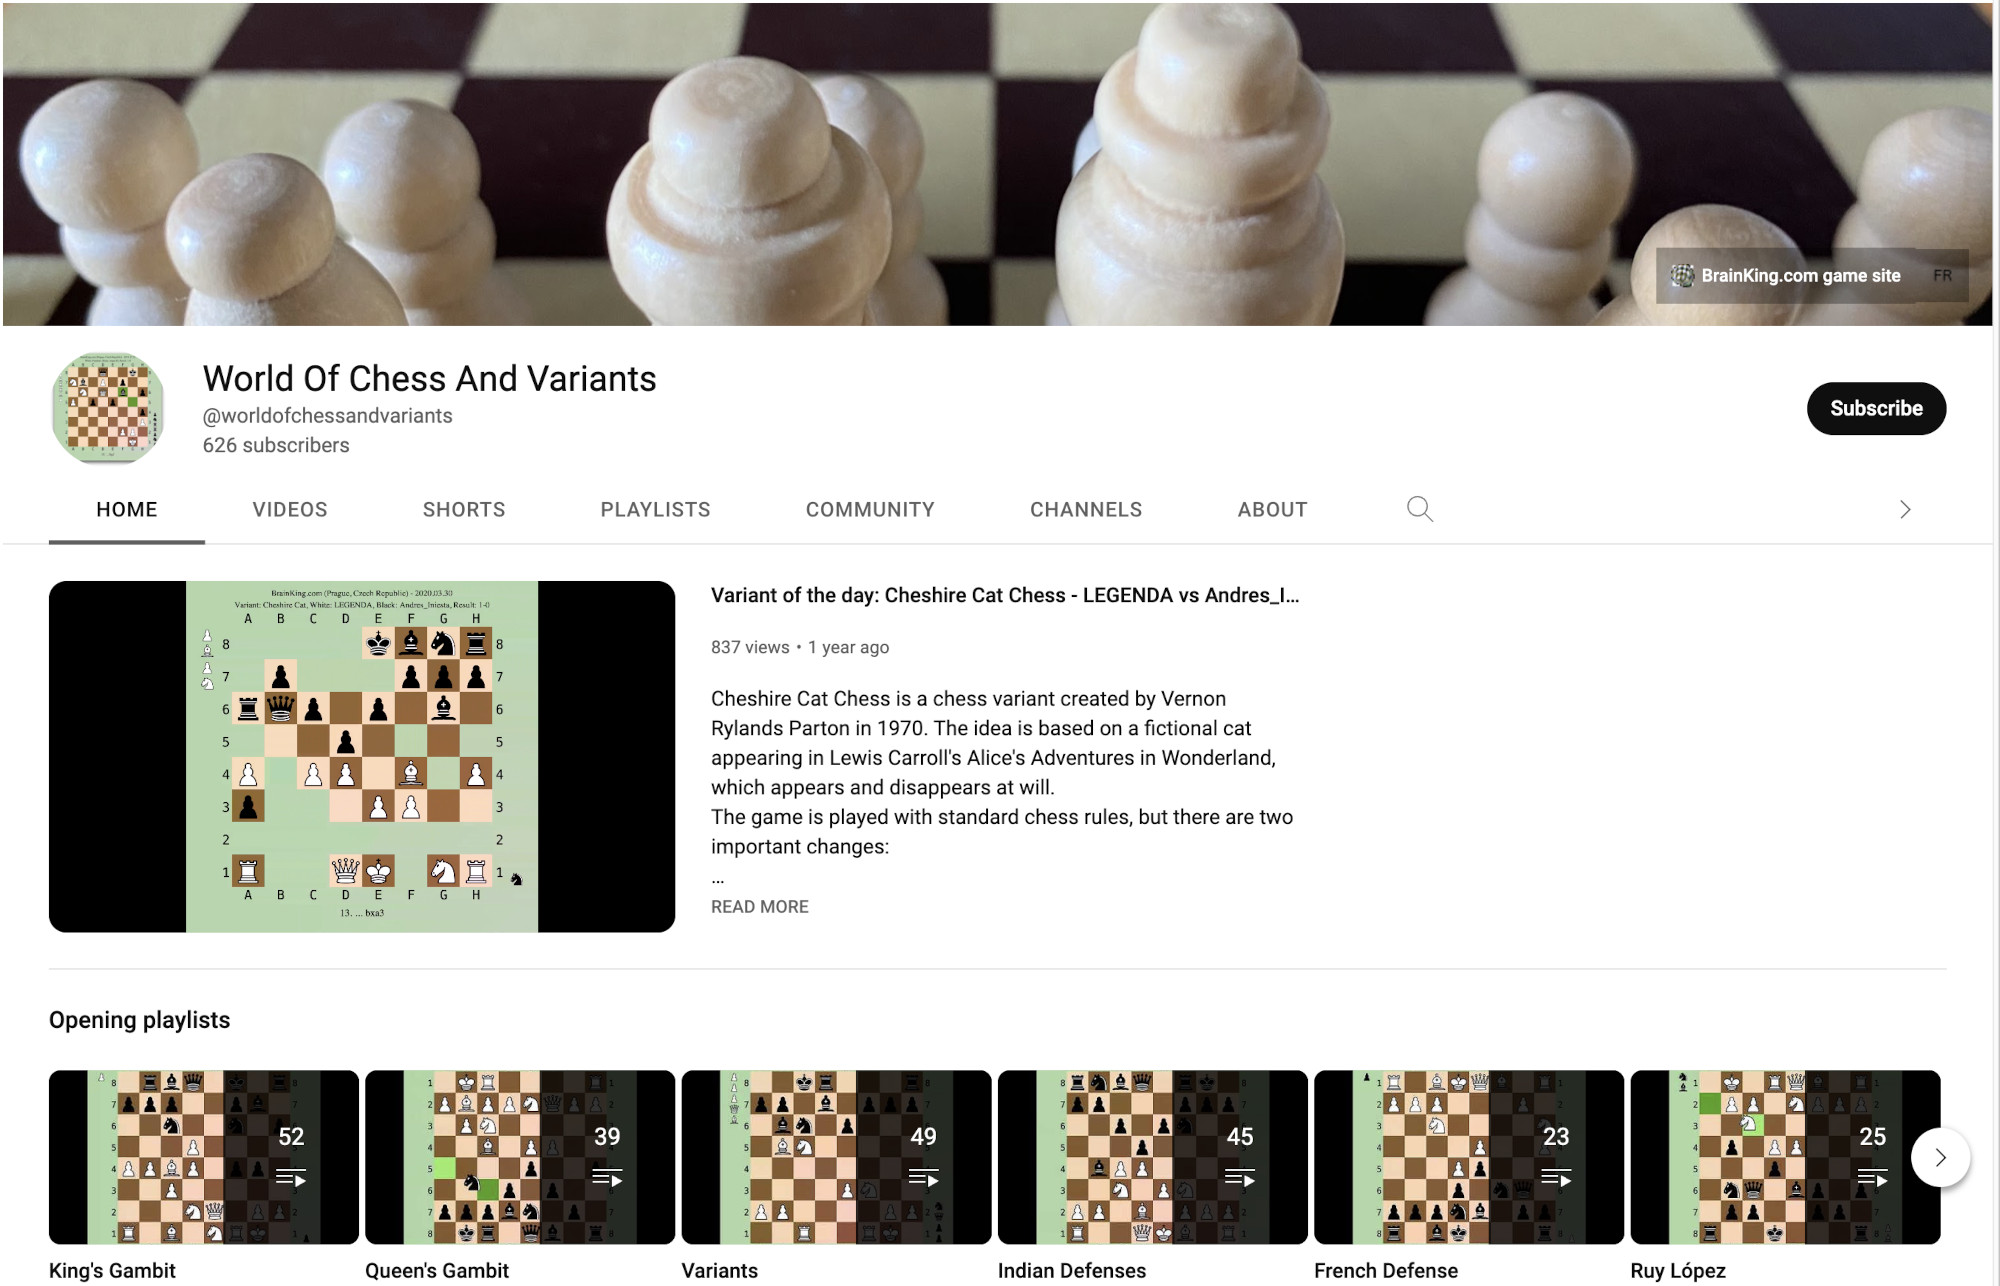 Chess Videos